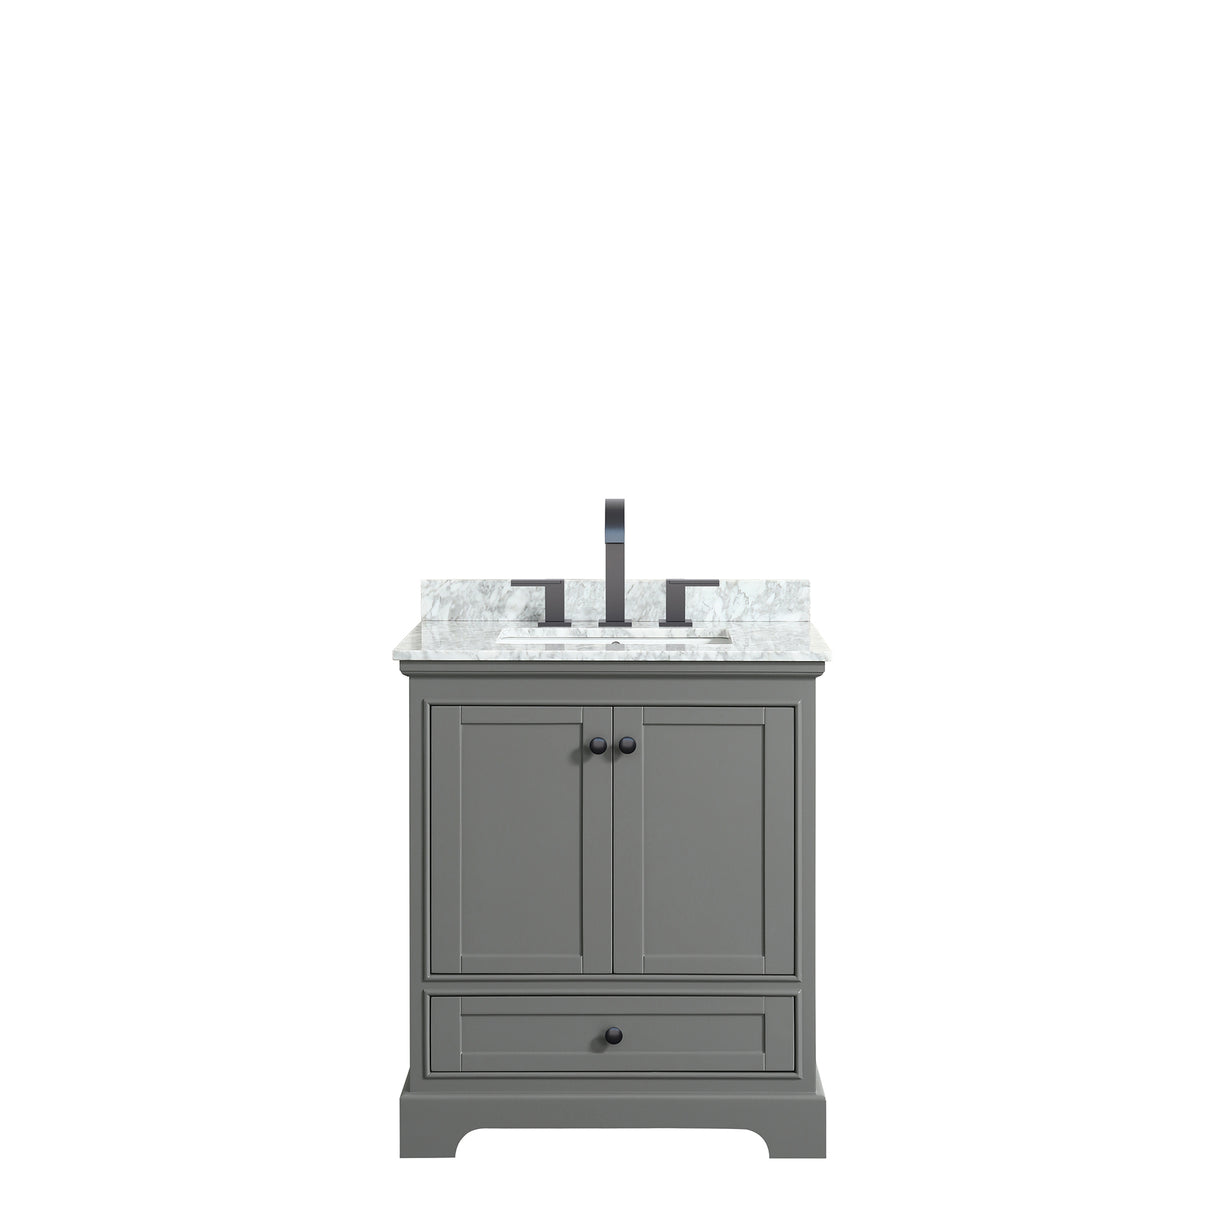 Deborah 30 Inch Single Bathroom Vanity in Dark Gray White Carrara Marble Countertop Undermount Square Sink Matte Black Trim